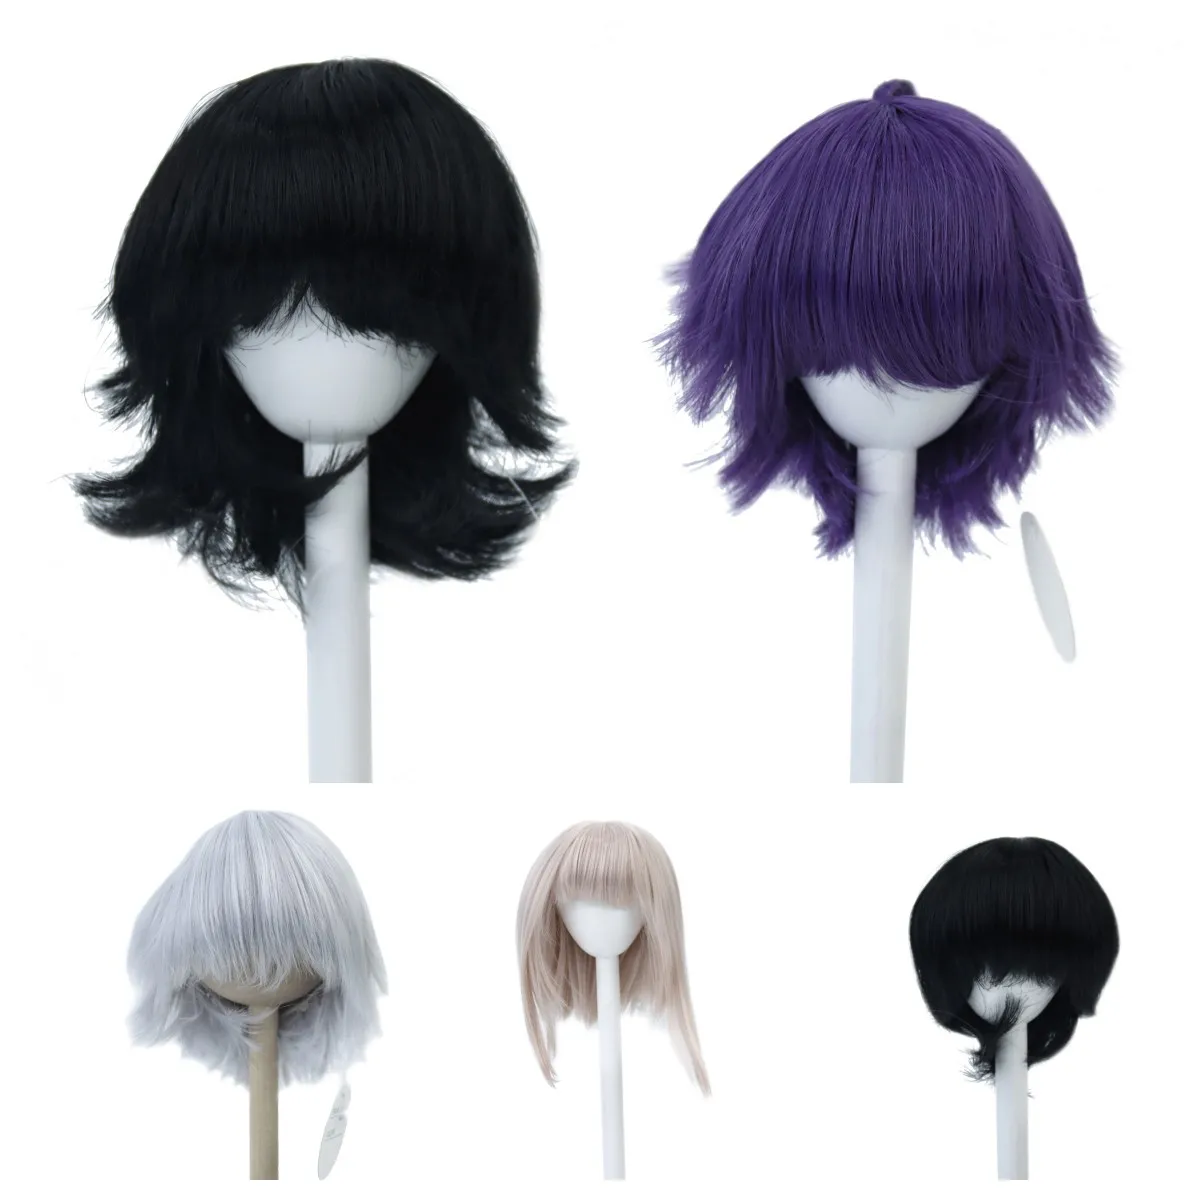 New 1/3 BJD Anime Doll Wigs Short Bobo With Bangs Purple White Black High Temperature Fiber For Dollfie Dream SD MSD Doll Hair